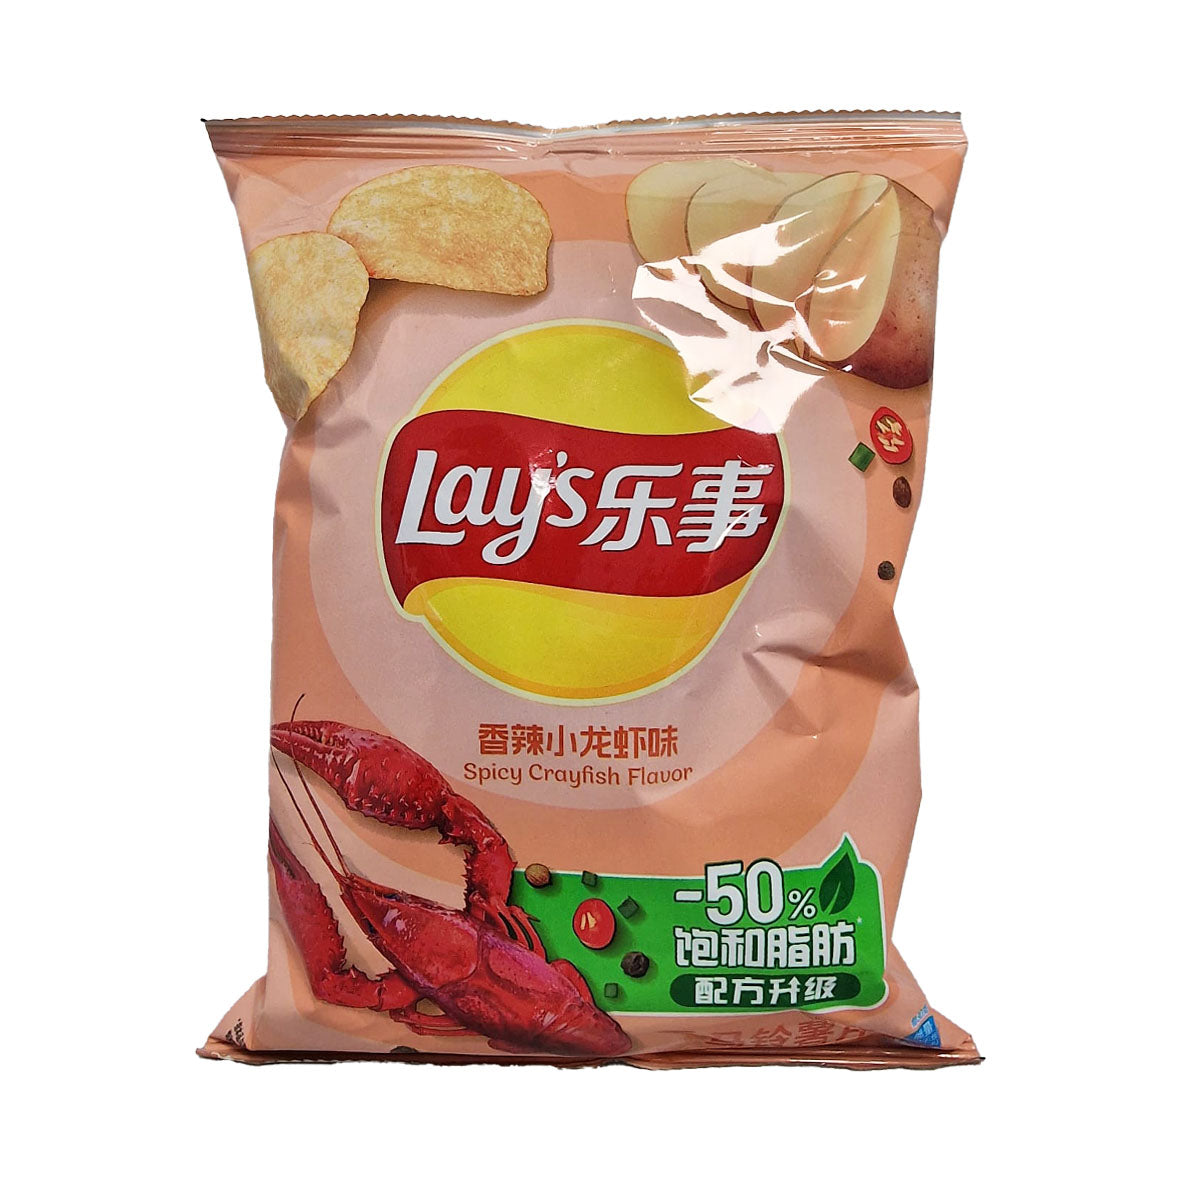 Lays Chips - Spicy Crayfish Flavor